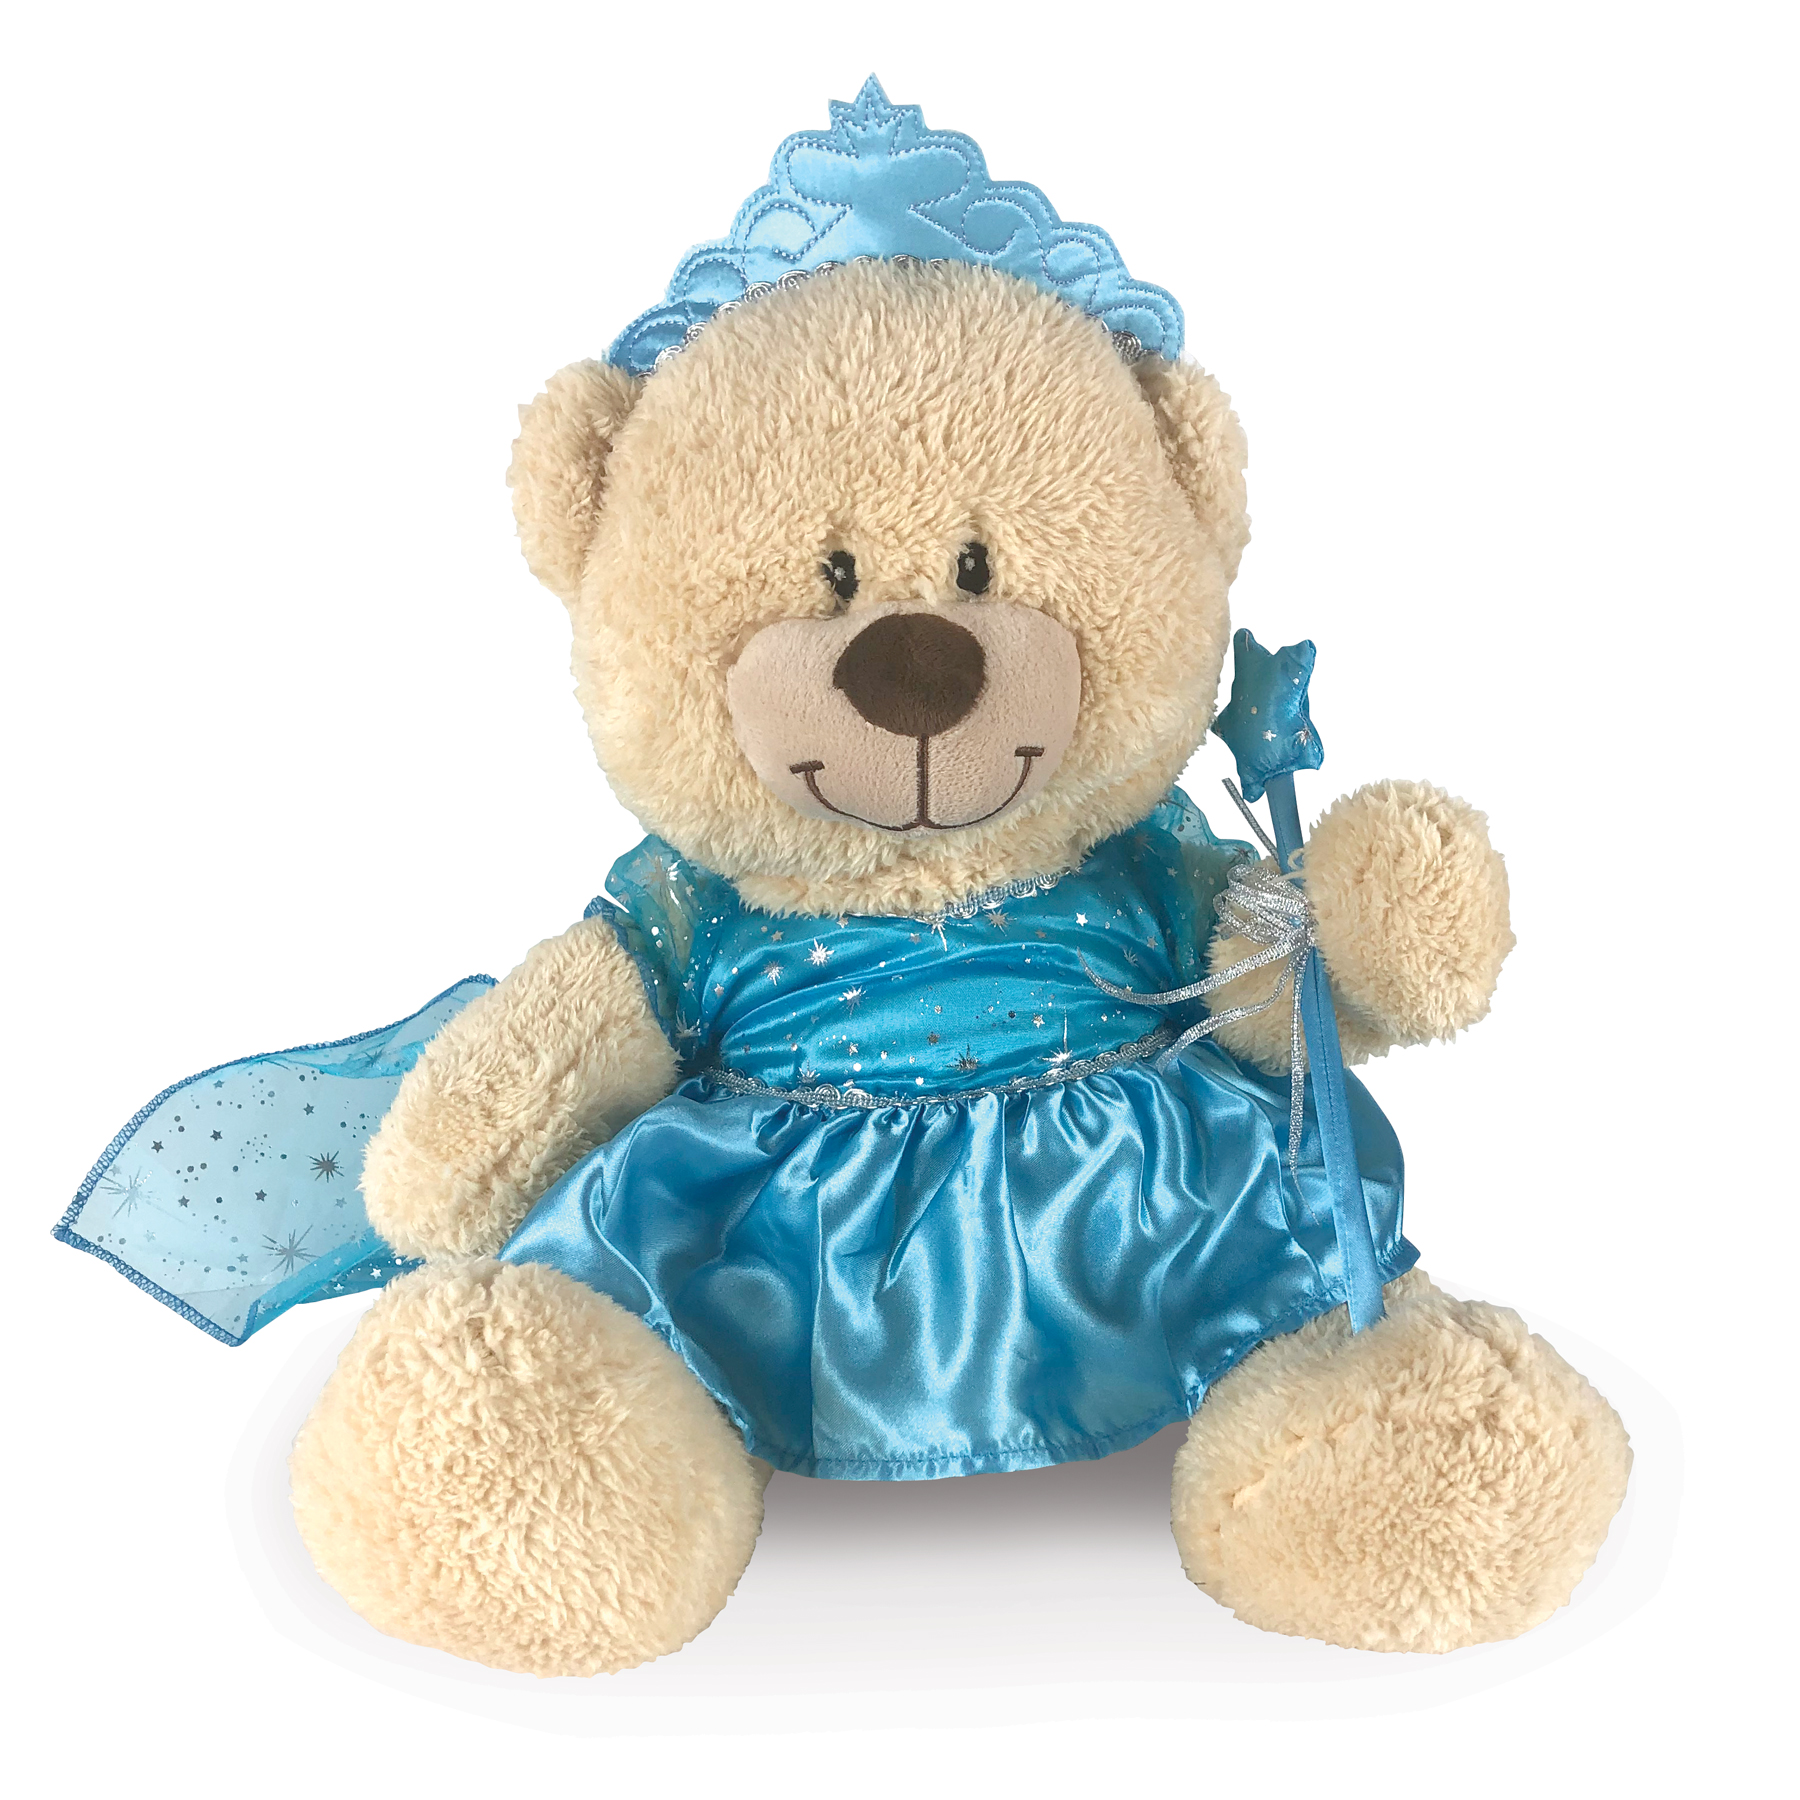 Blue Princess Dress for Stuffed Animal | Snow Princess Dress Bear Accessory